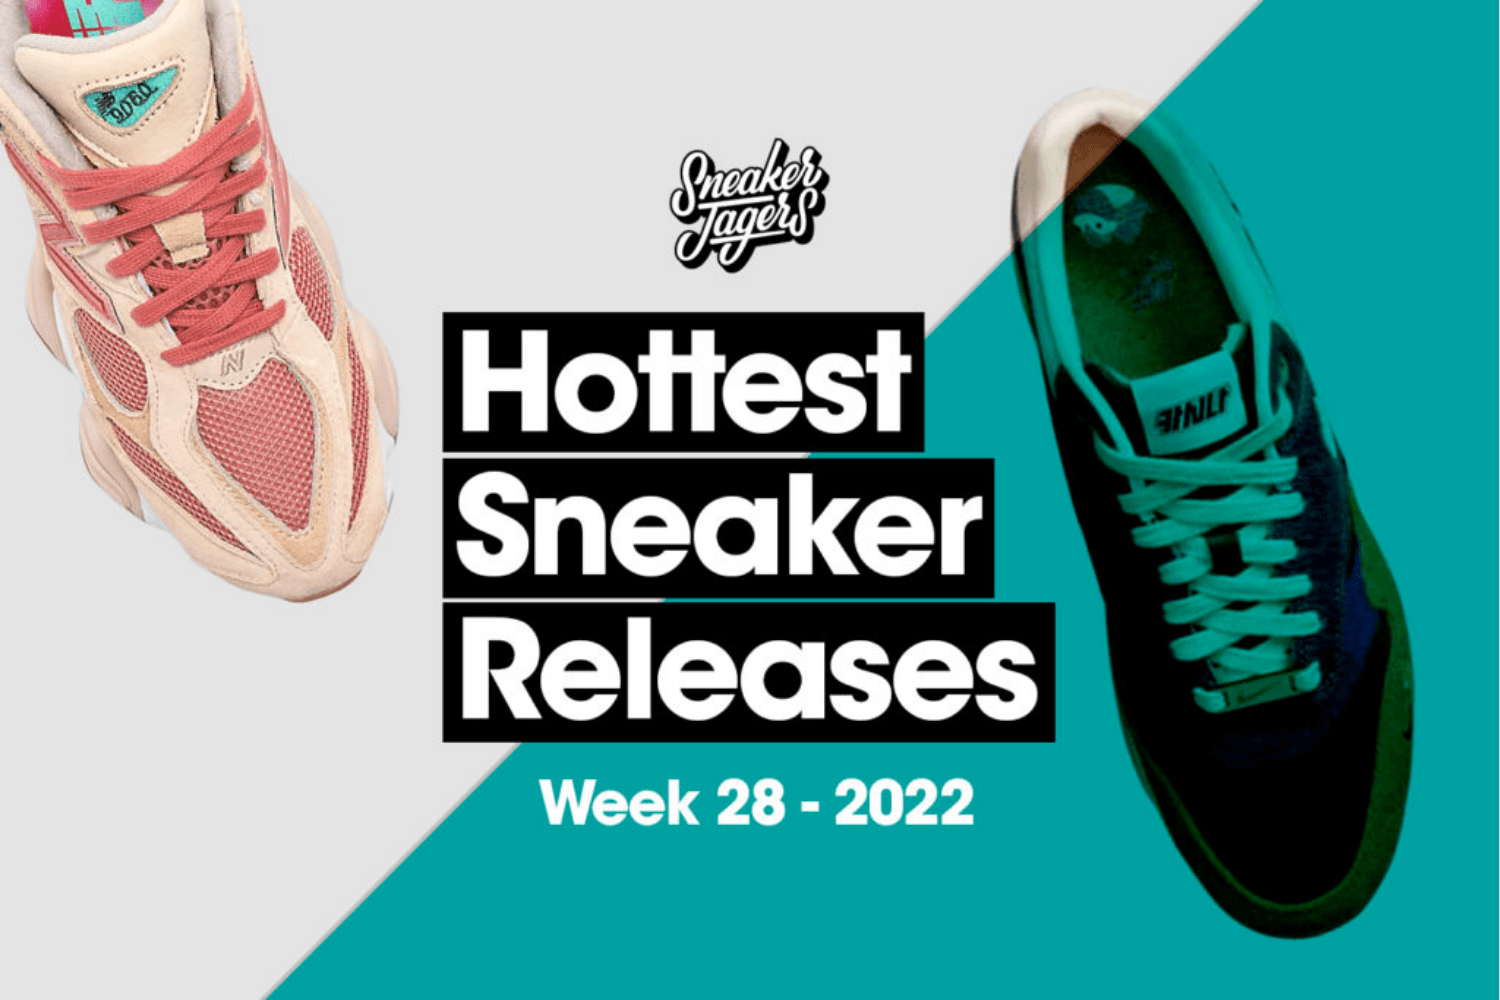 Hottest Sneaker Release Reminder Juli 🔥 Woche 28